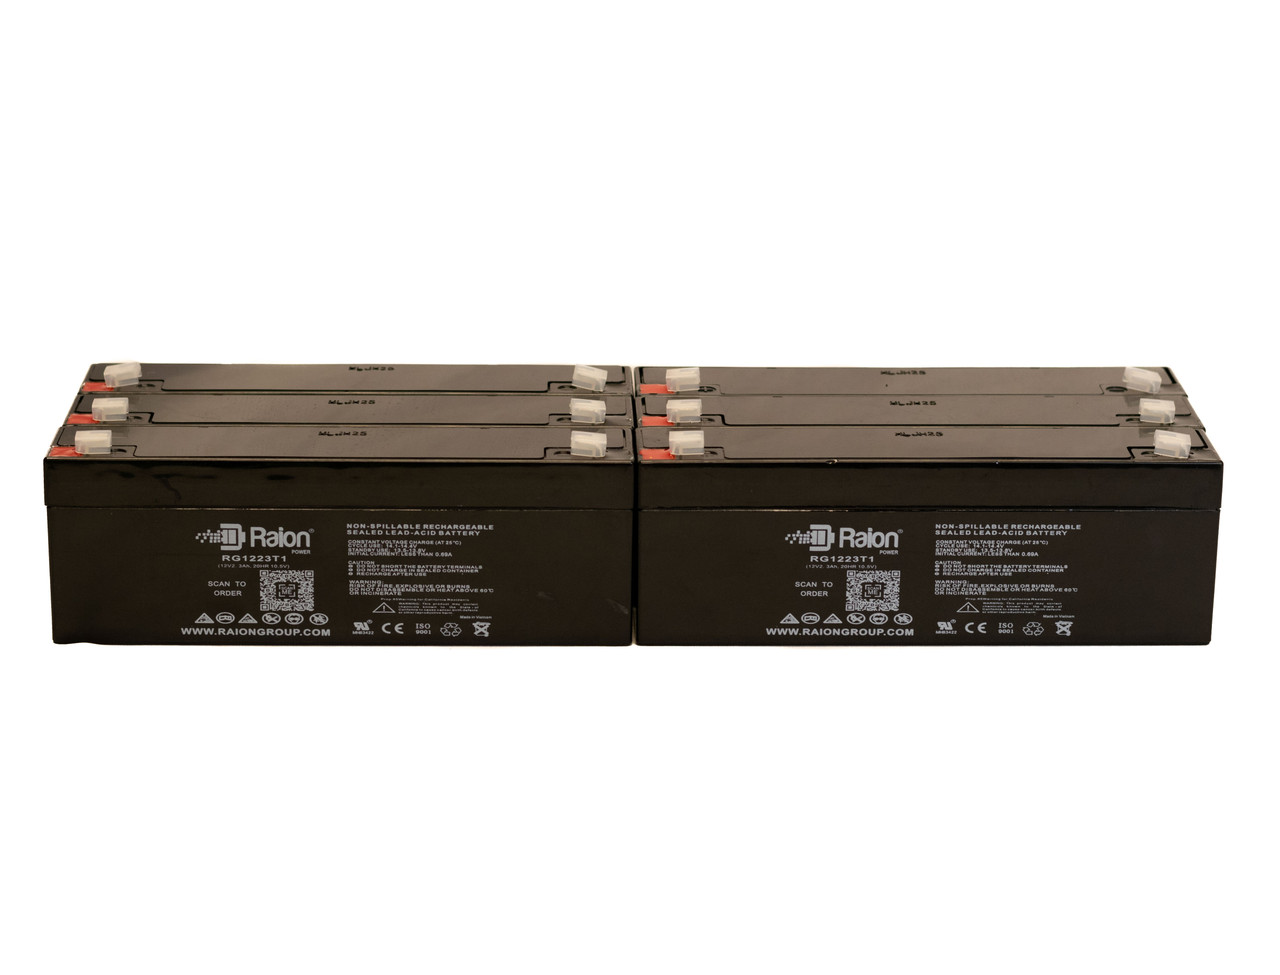 Raion Power 12V 2.3Ah RG1223T1 Replacement Medical Battery for Elmed PSO 100 Pulseoximeter - 6 Pack